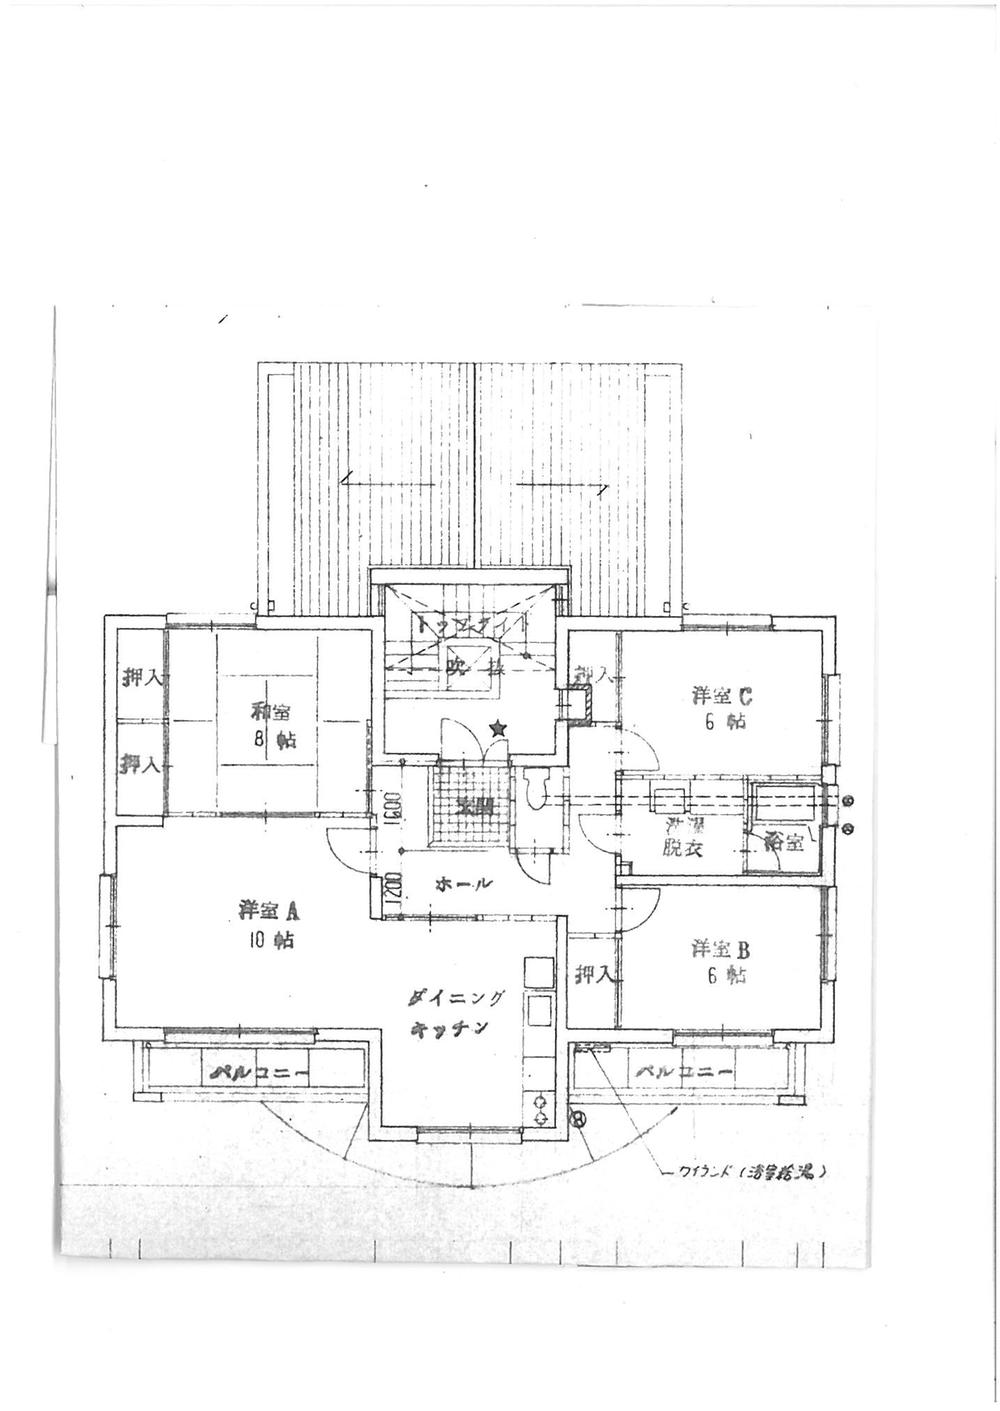 Floor plan. 3LDK, Price 13.5 million yen, Occupied area 83.93 sq m , Balcony area 10.2 sq m